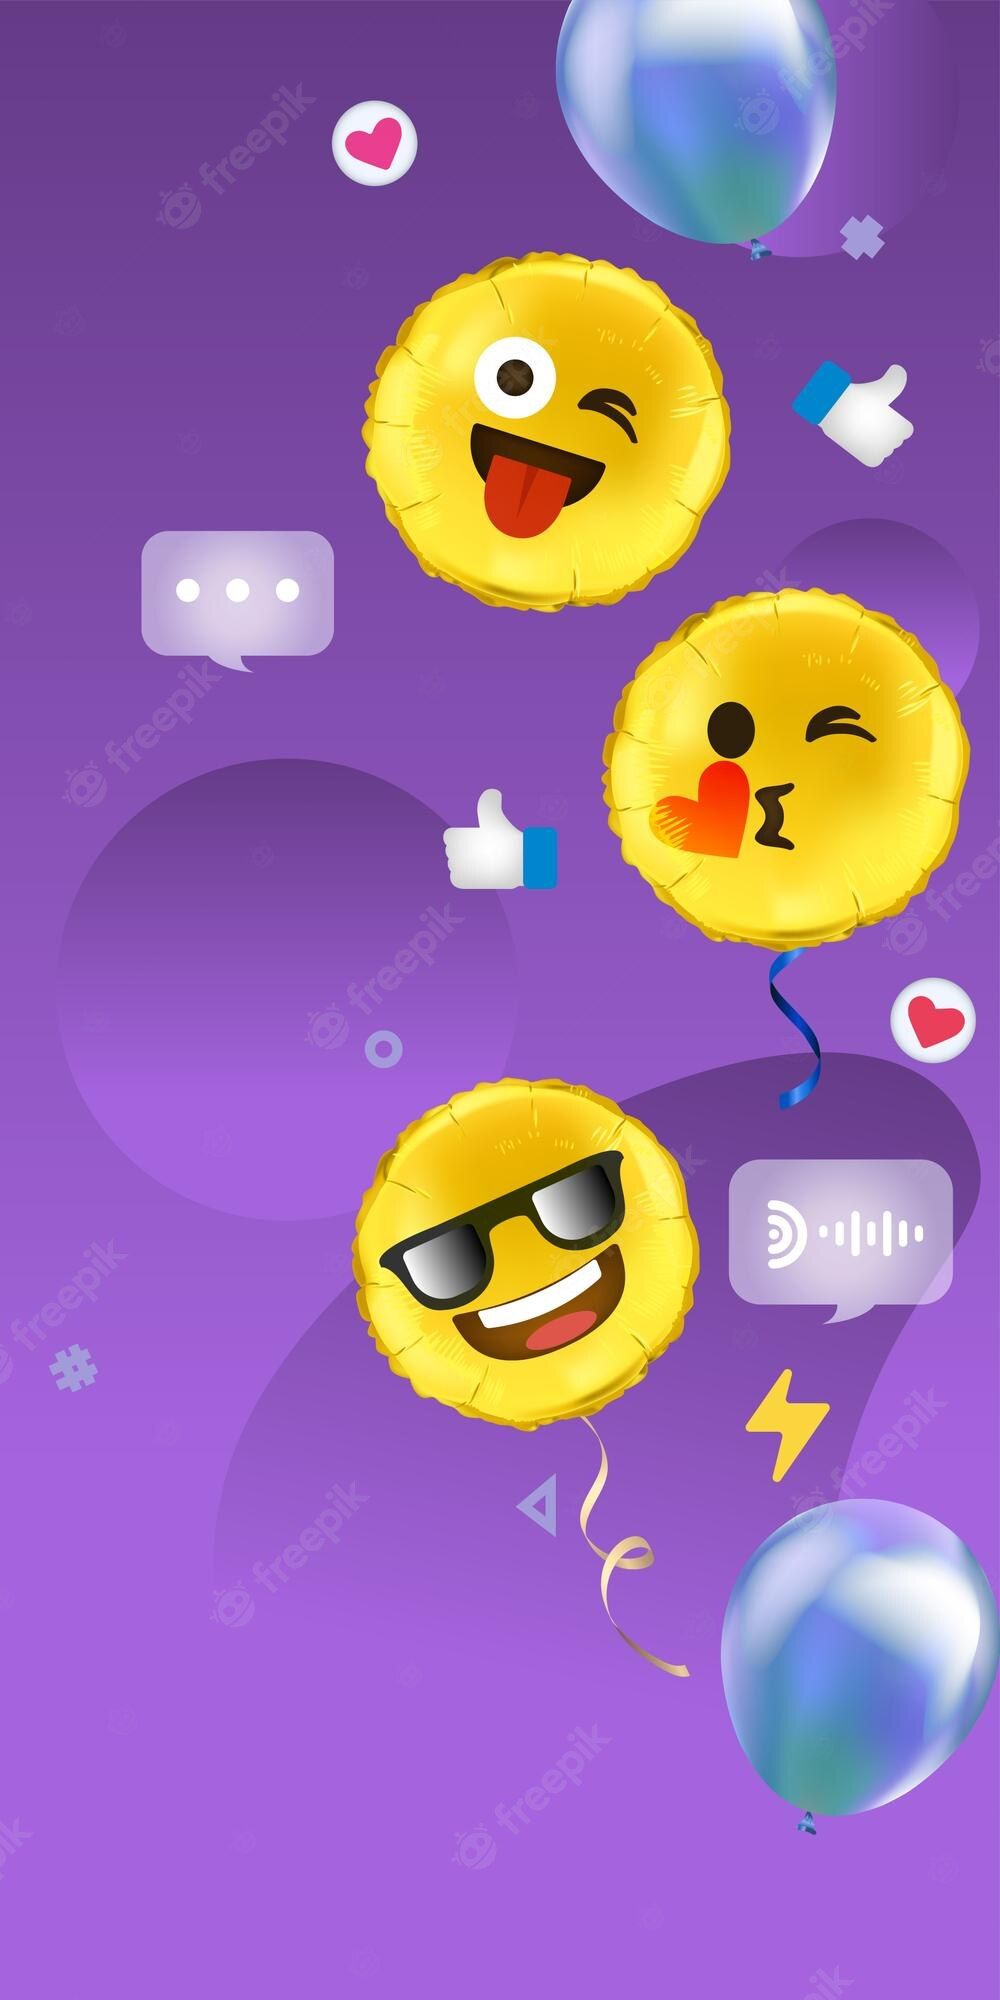 Social media emoji Vectors & Illustrations for Free Download